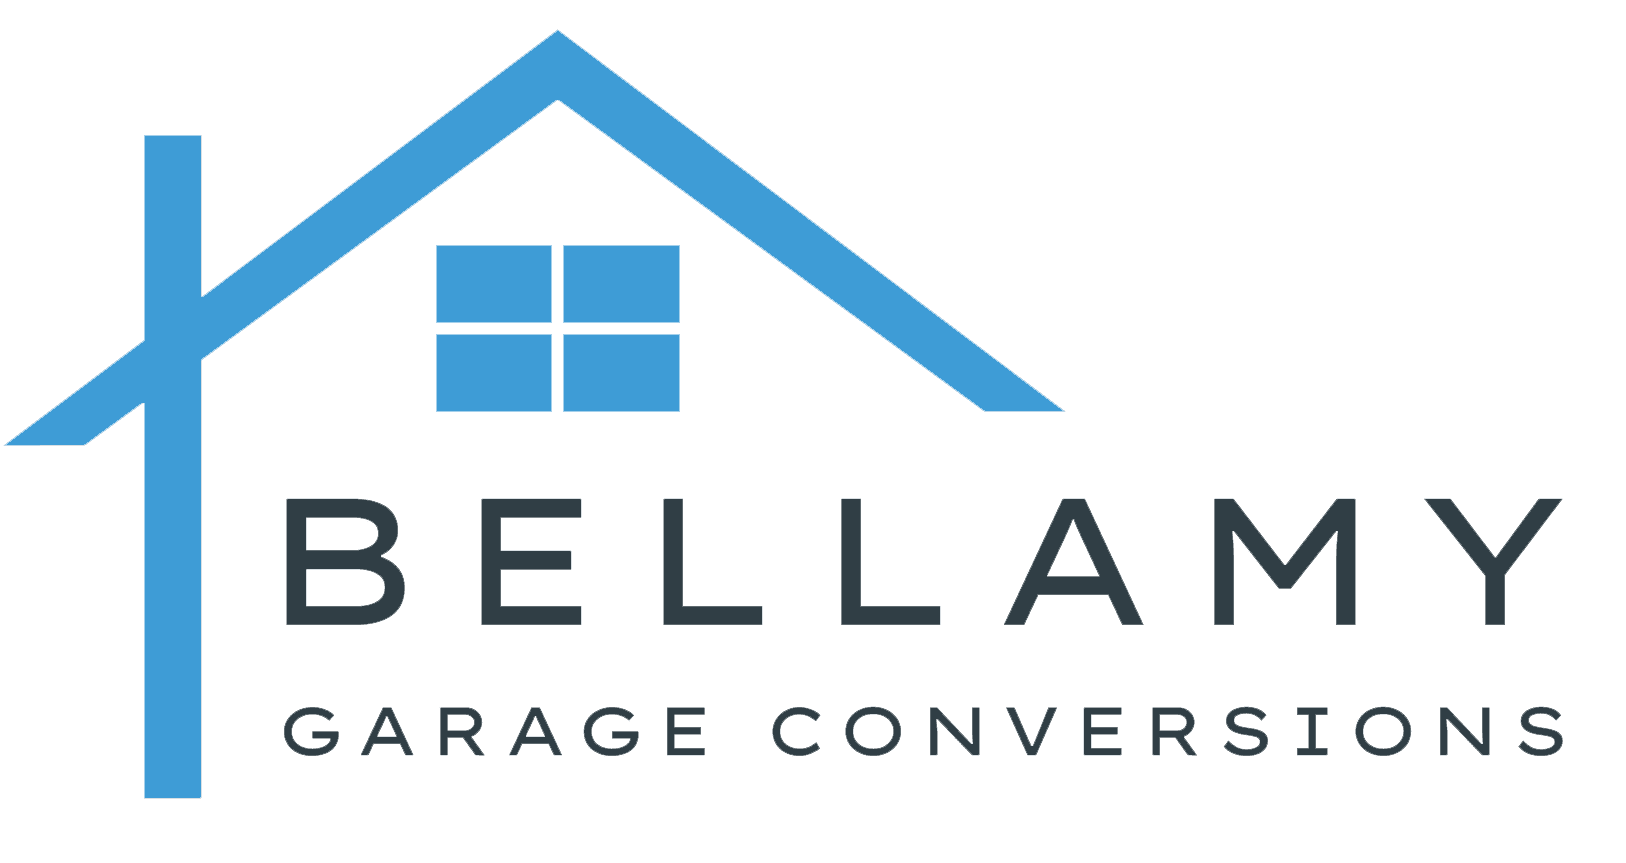 Bellamy Garage Conversions